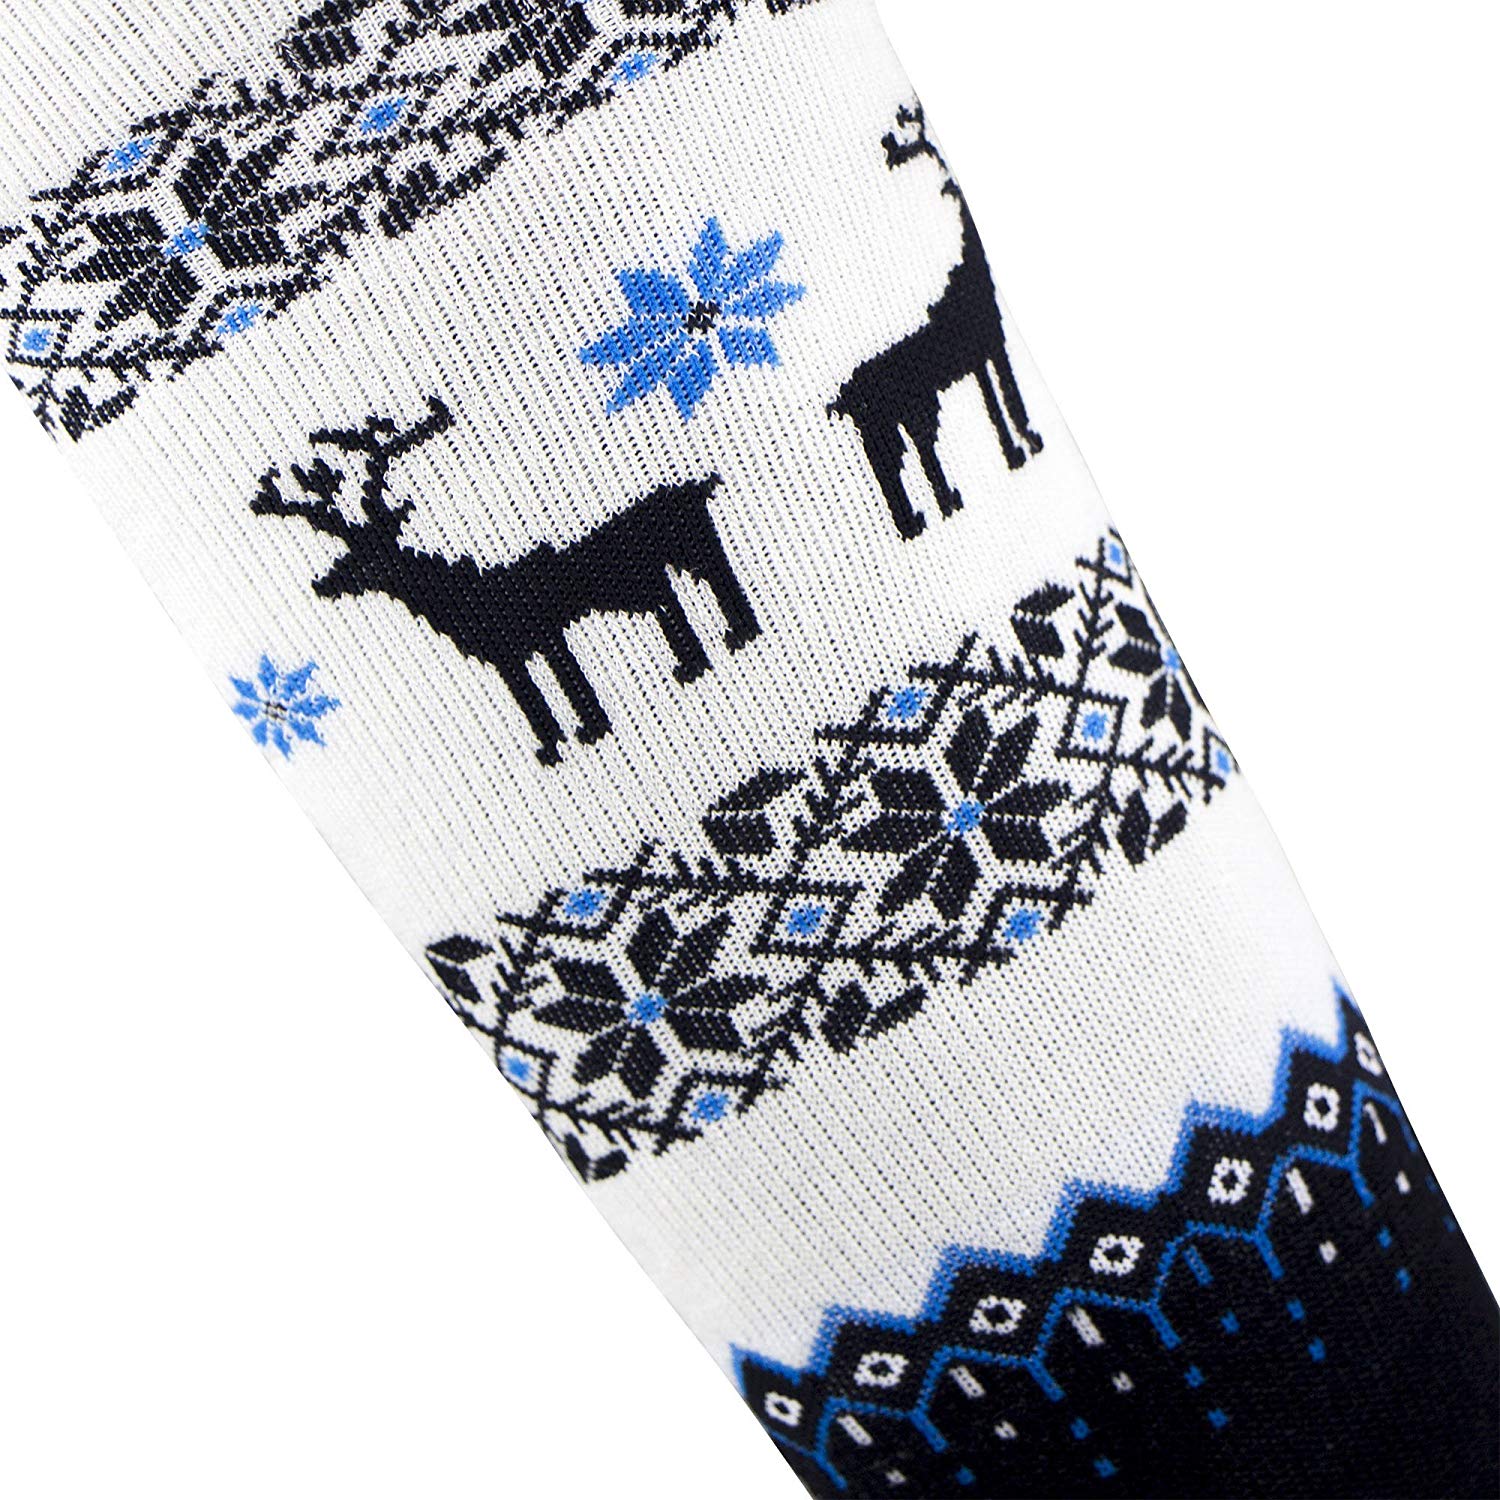 Deer Ski Socks